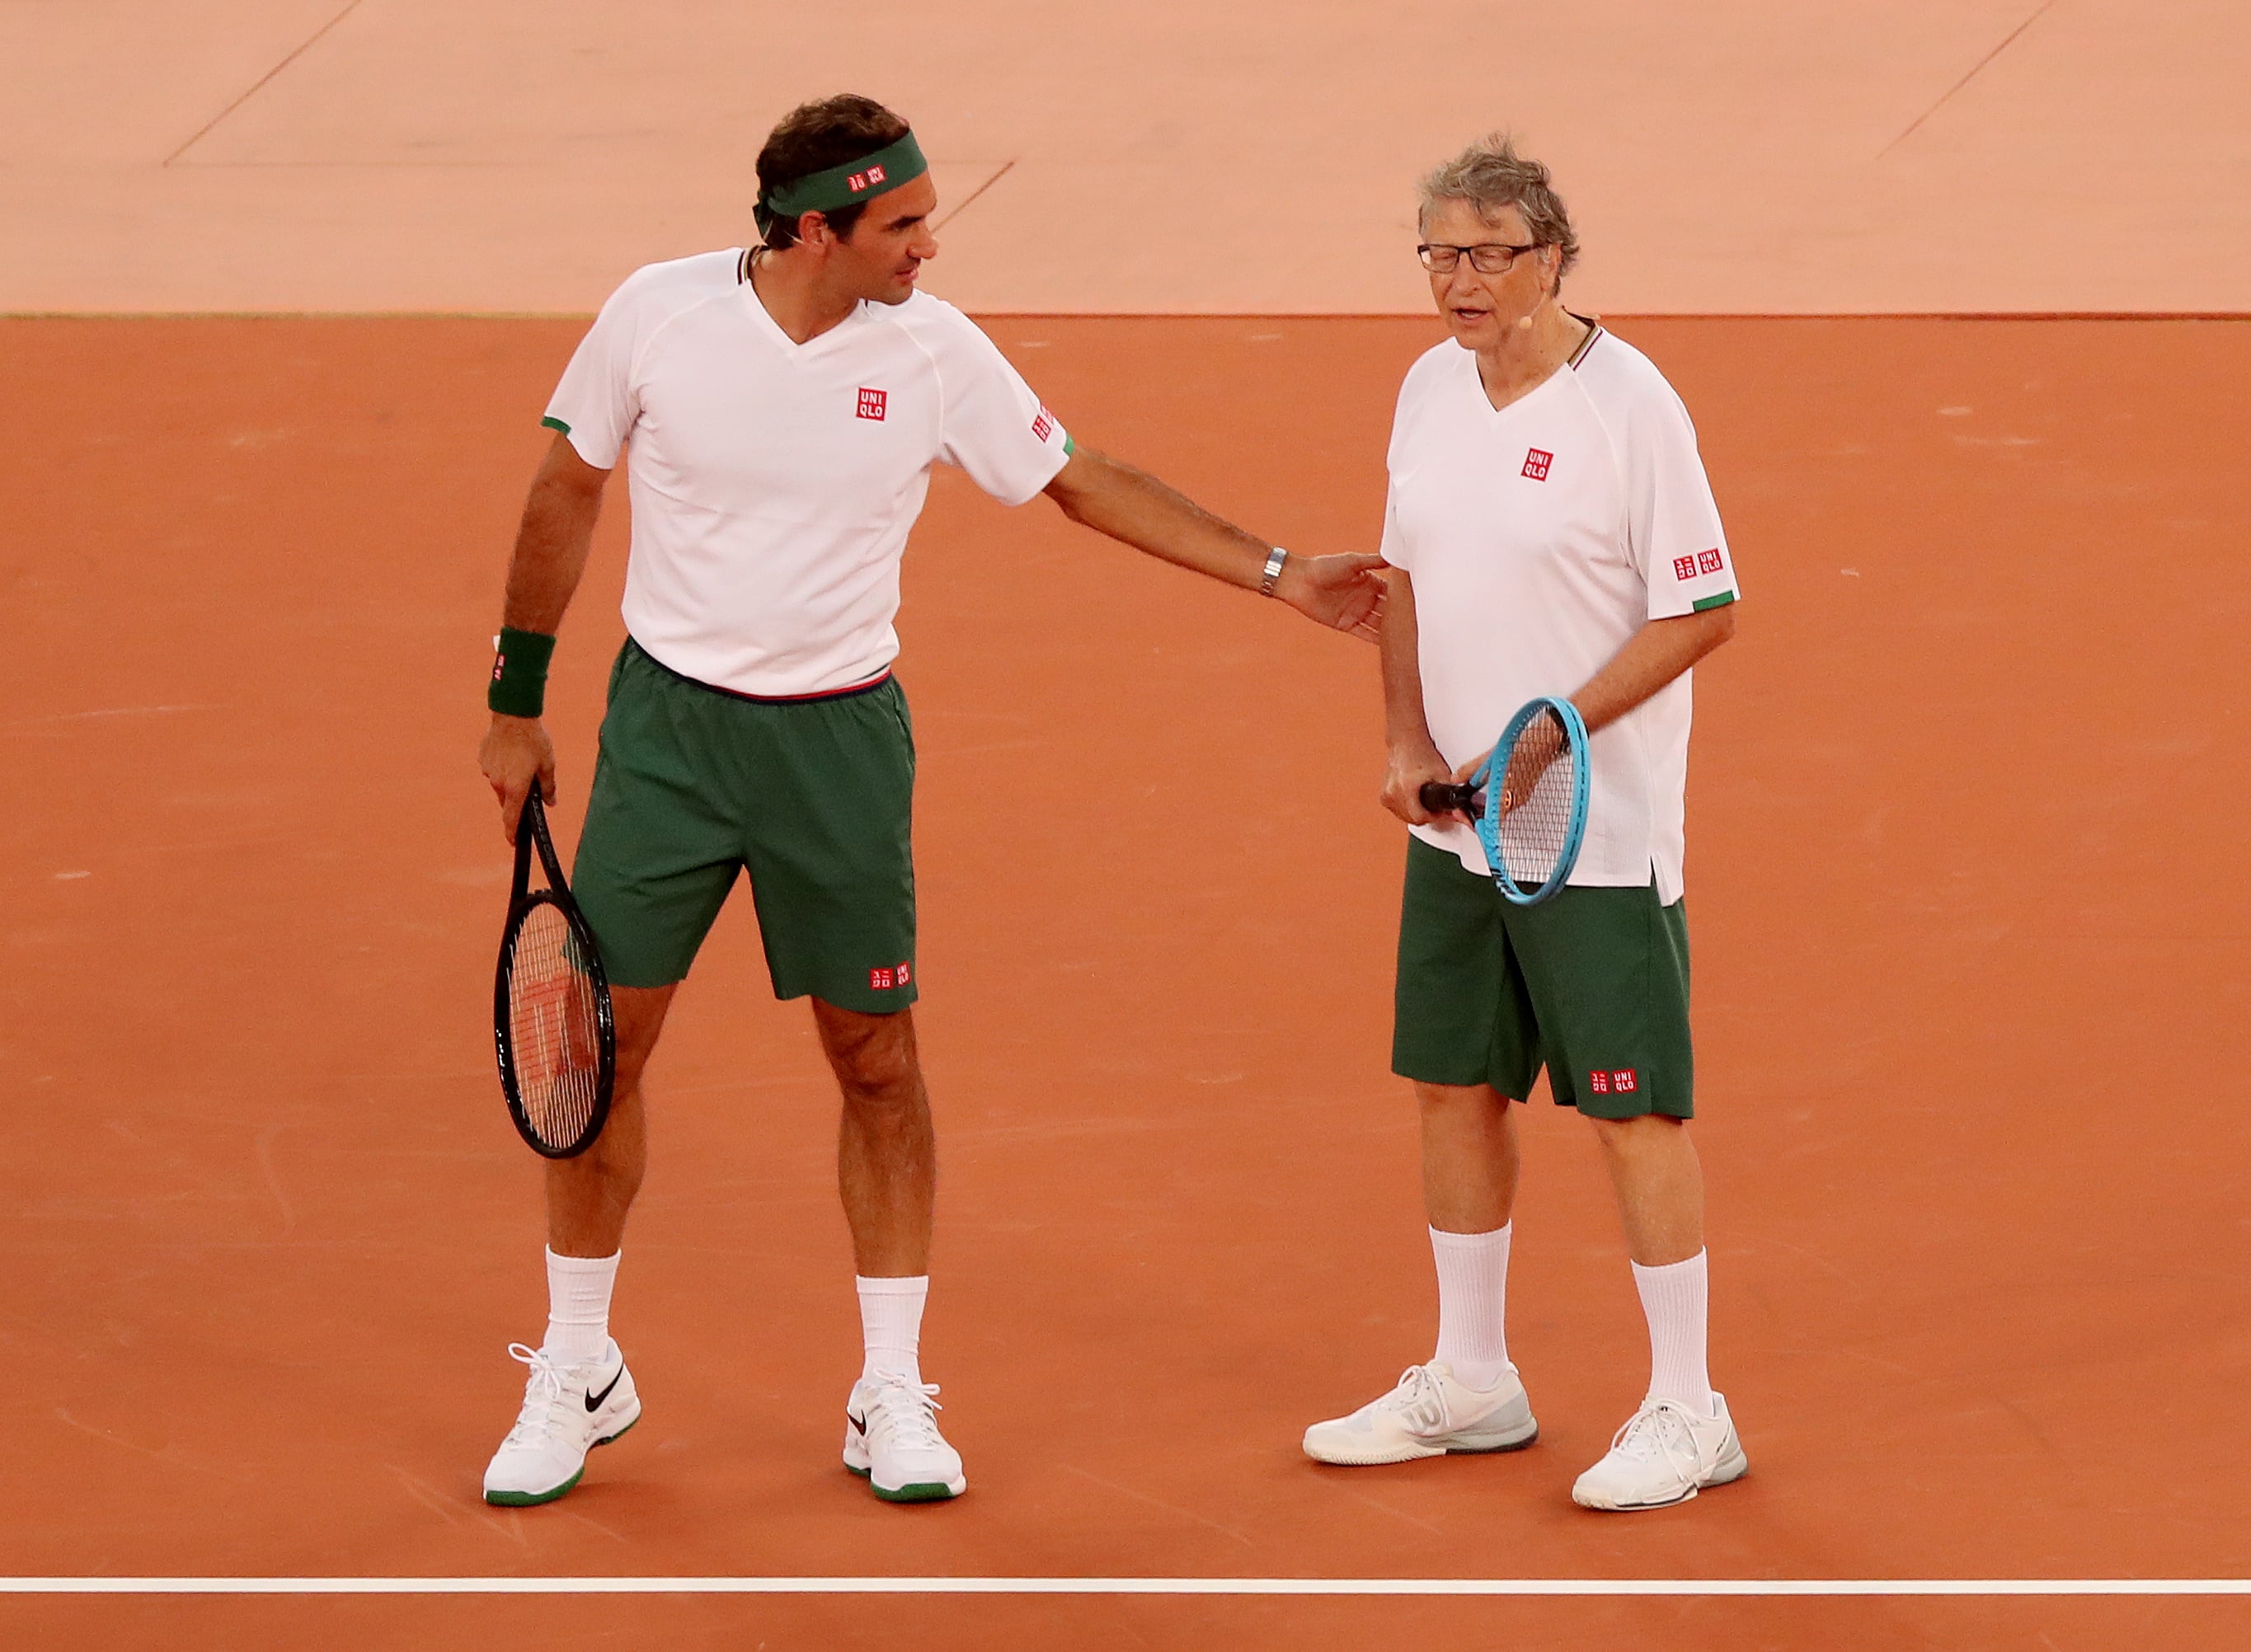 Gates y Federer han hechos dobles en pro de causas benéficas. REUTERS/Mike Hutchings